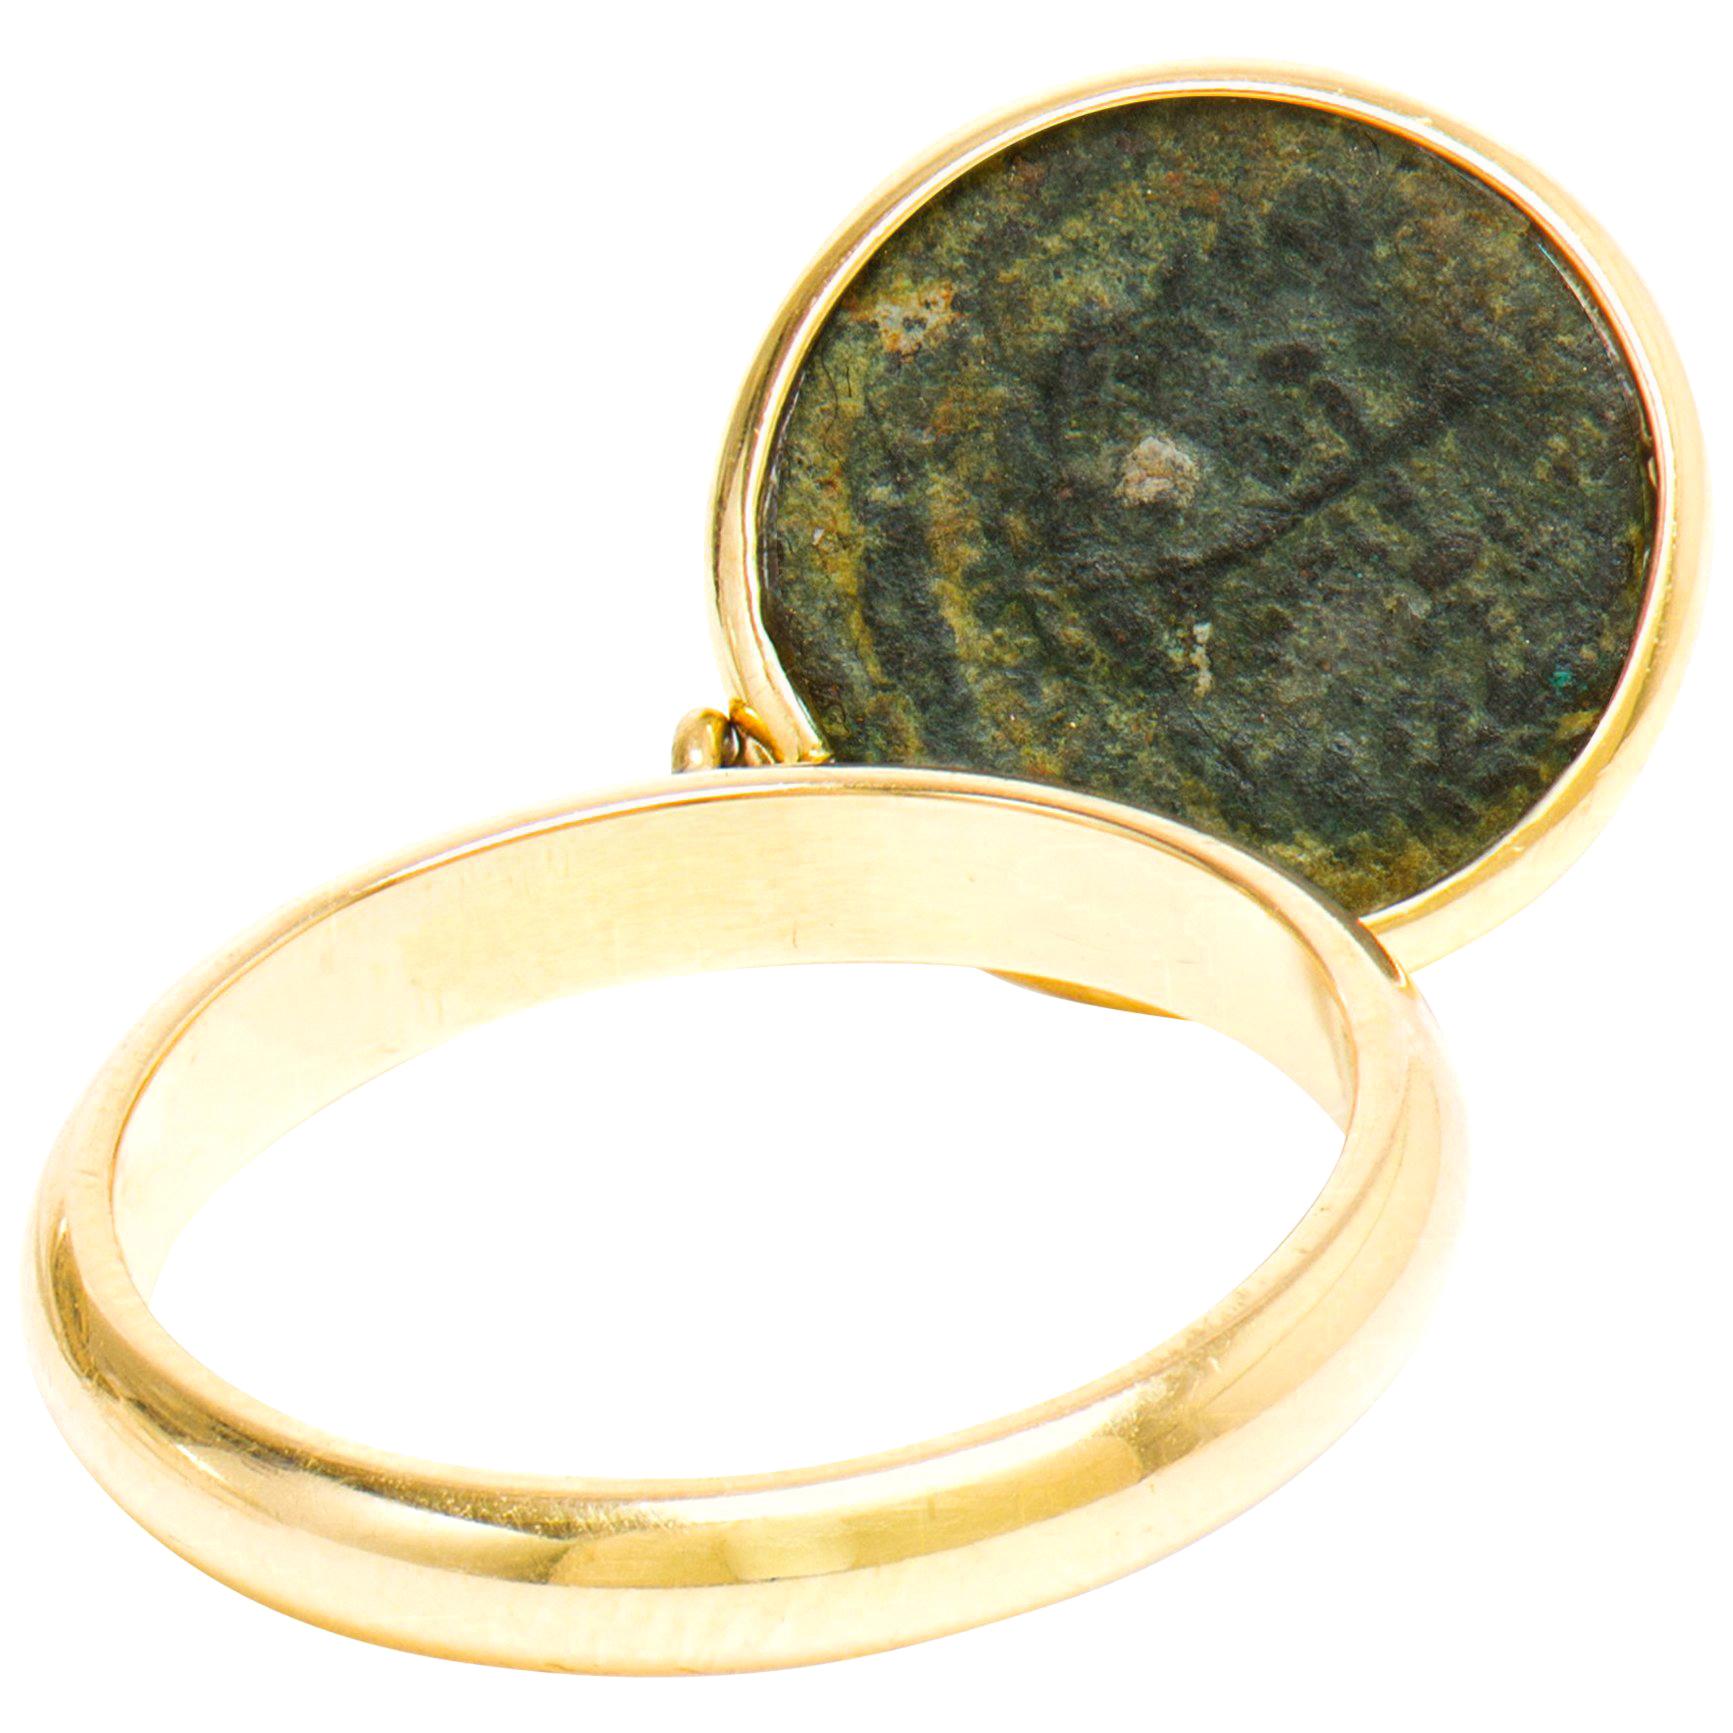 Dubini Emperor Flip Ancient Roman Bronze Coin 18 Karat Yellow Gold Ring